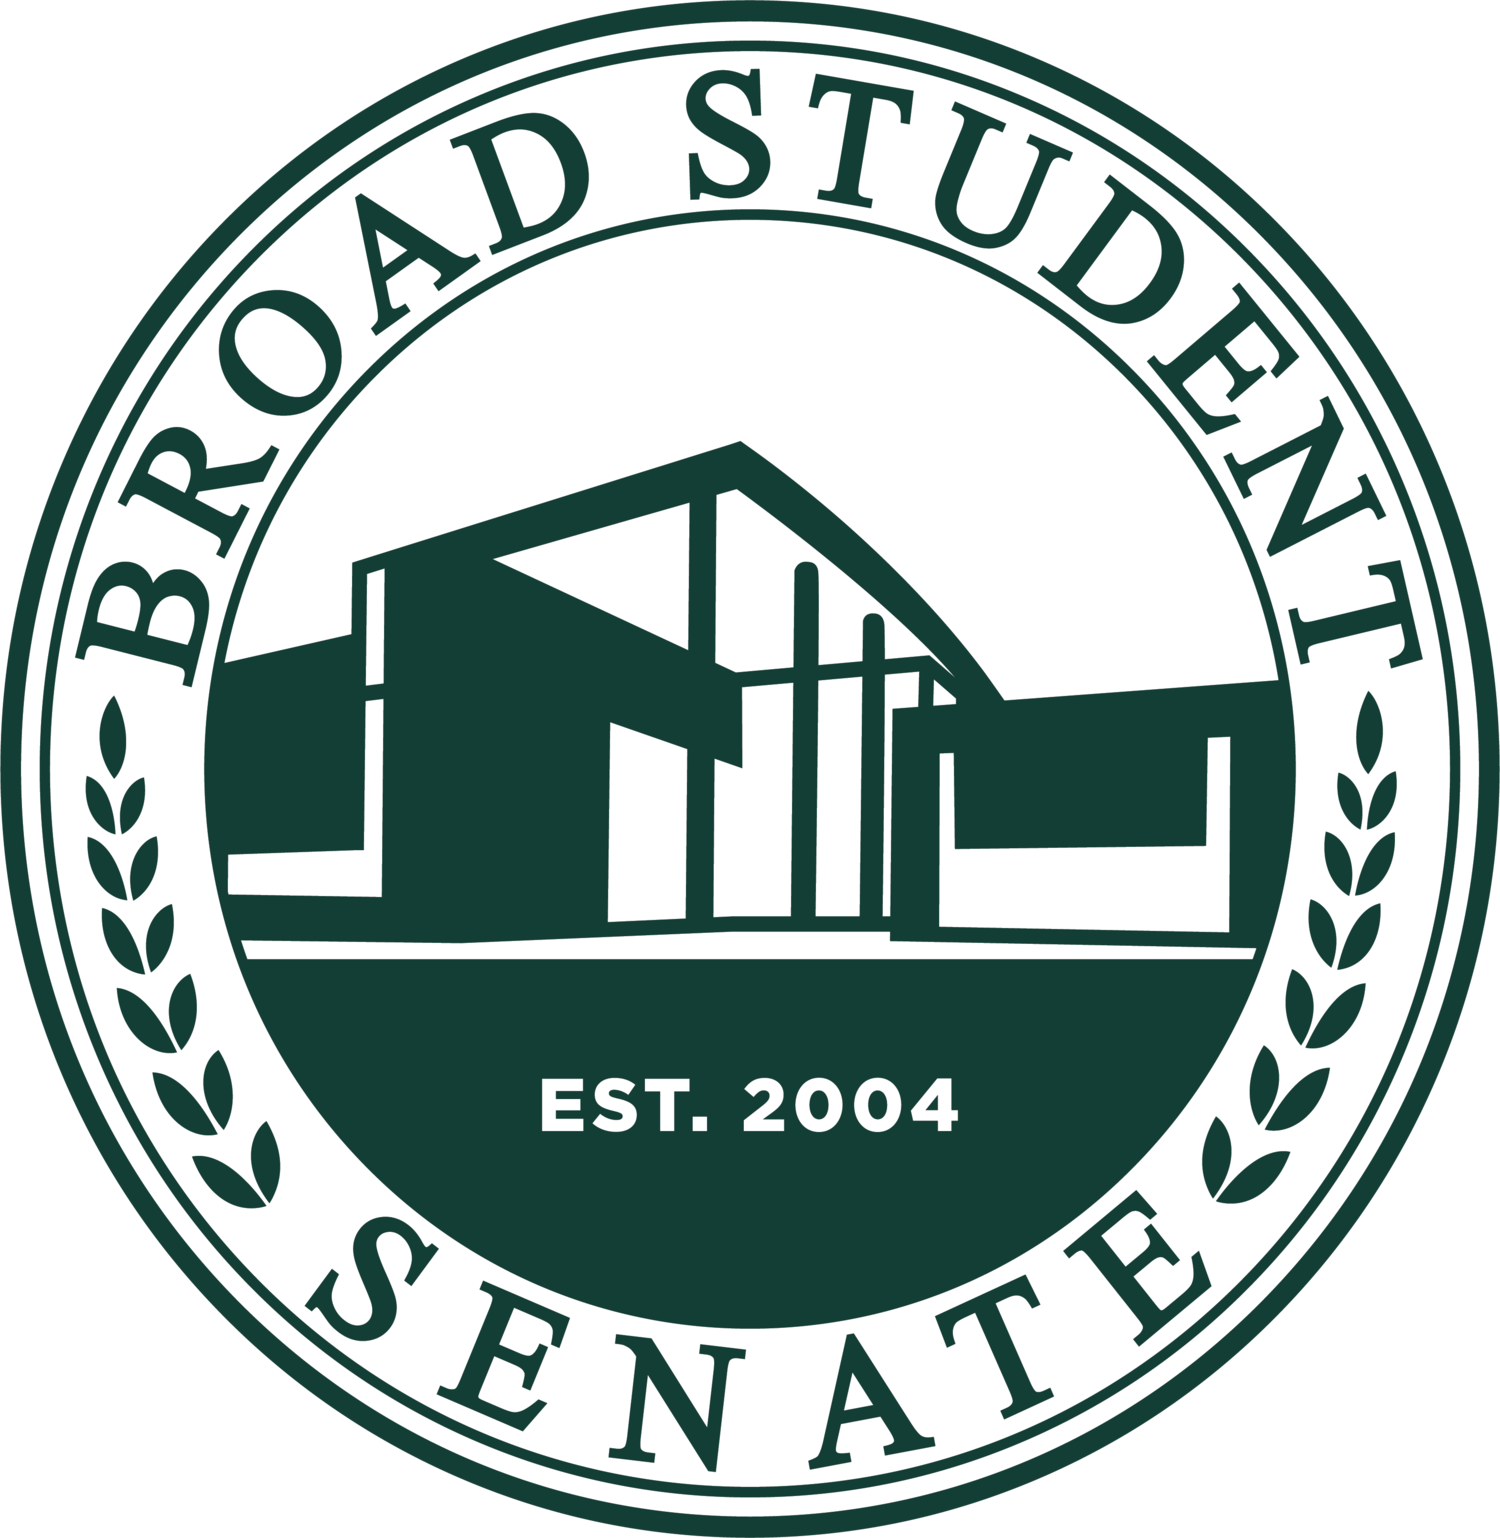 Broad Student Senate